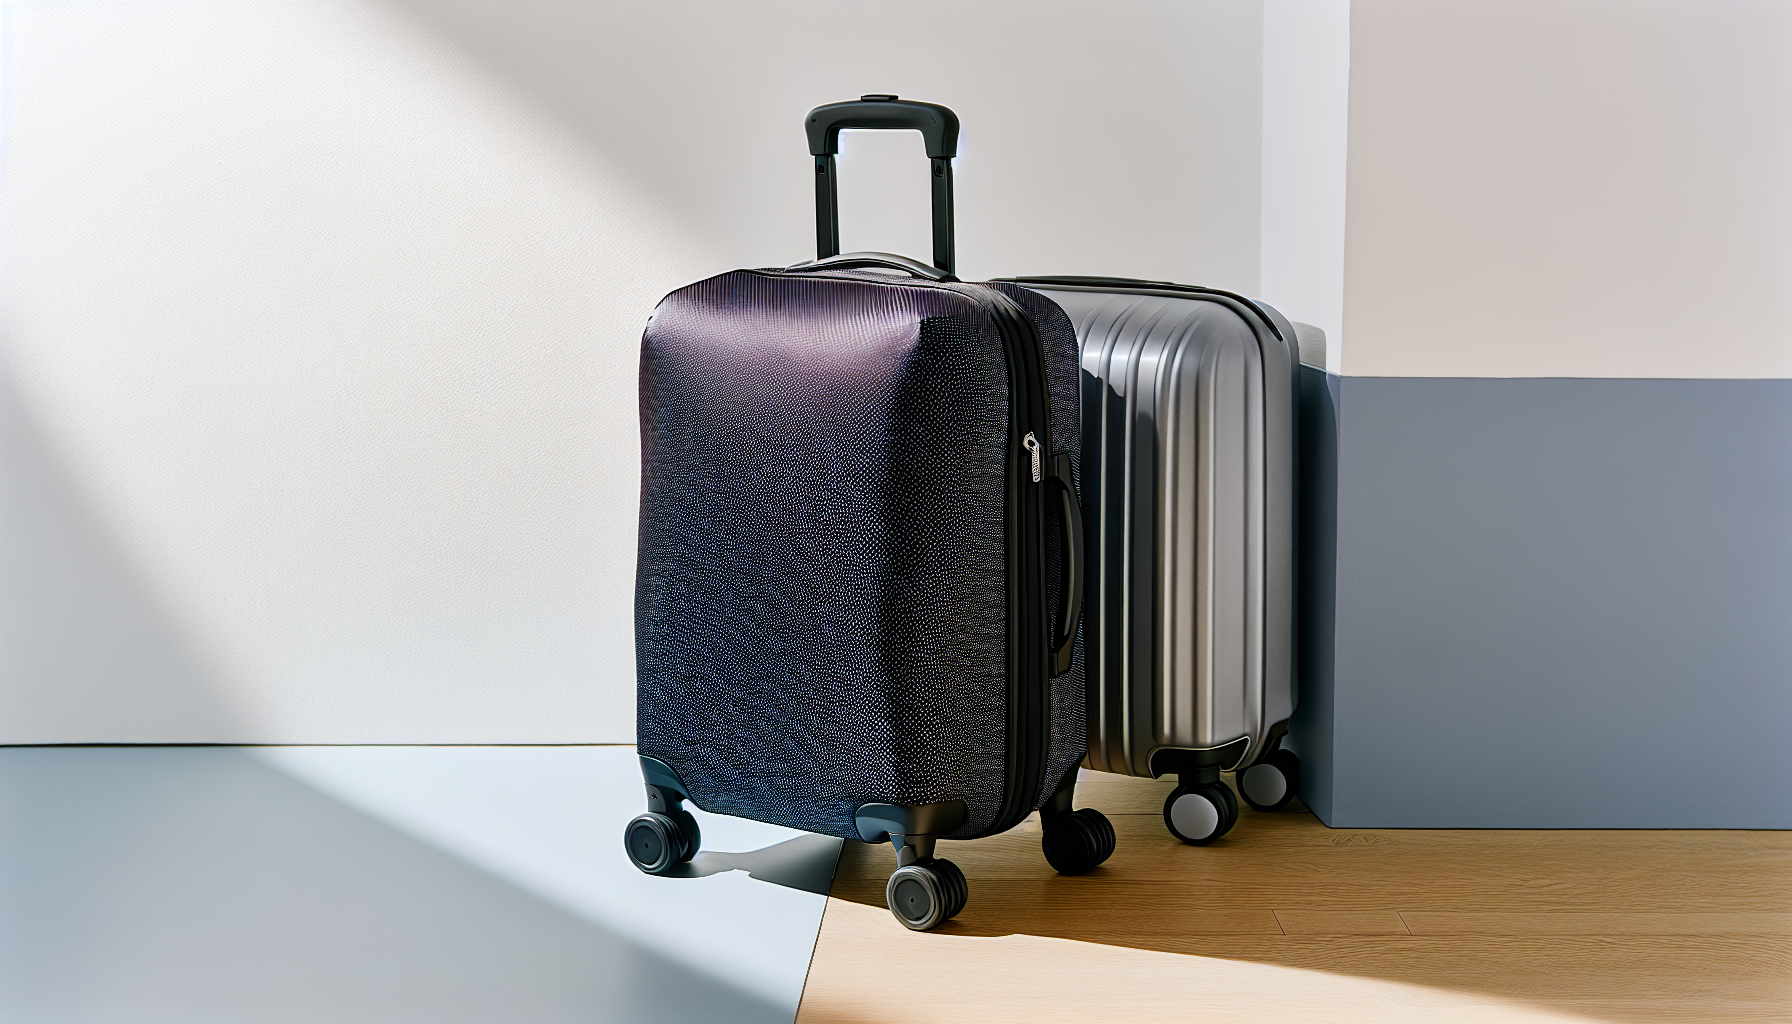 Stylish luggage cover protecting belongings